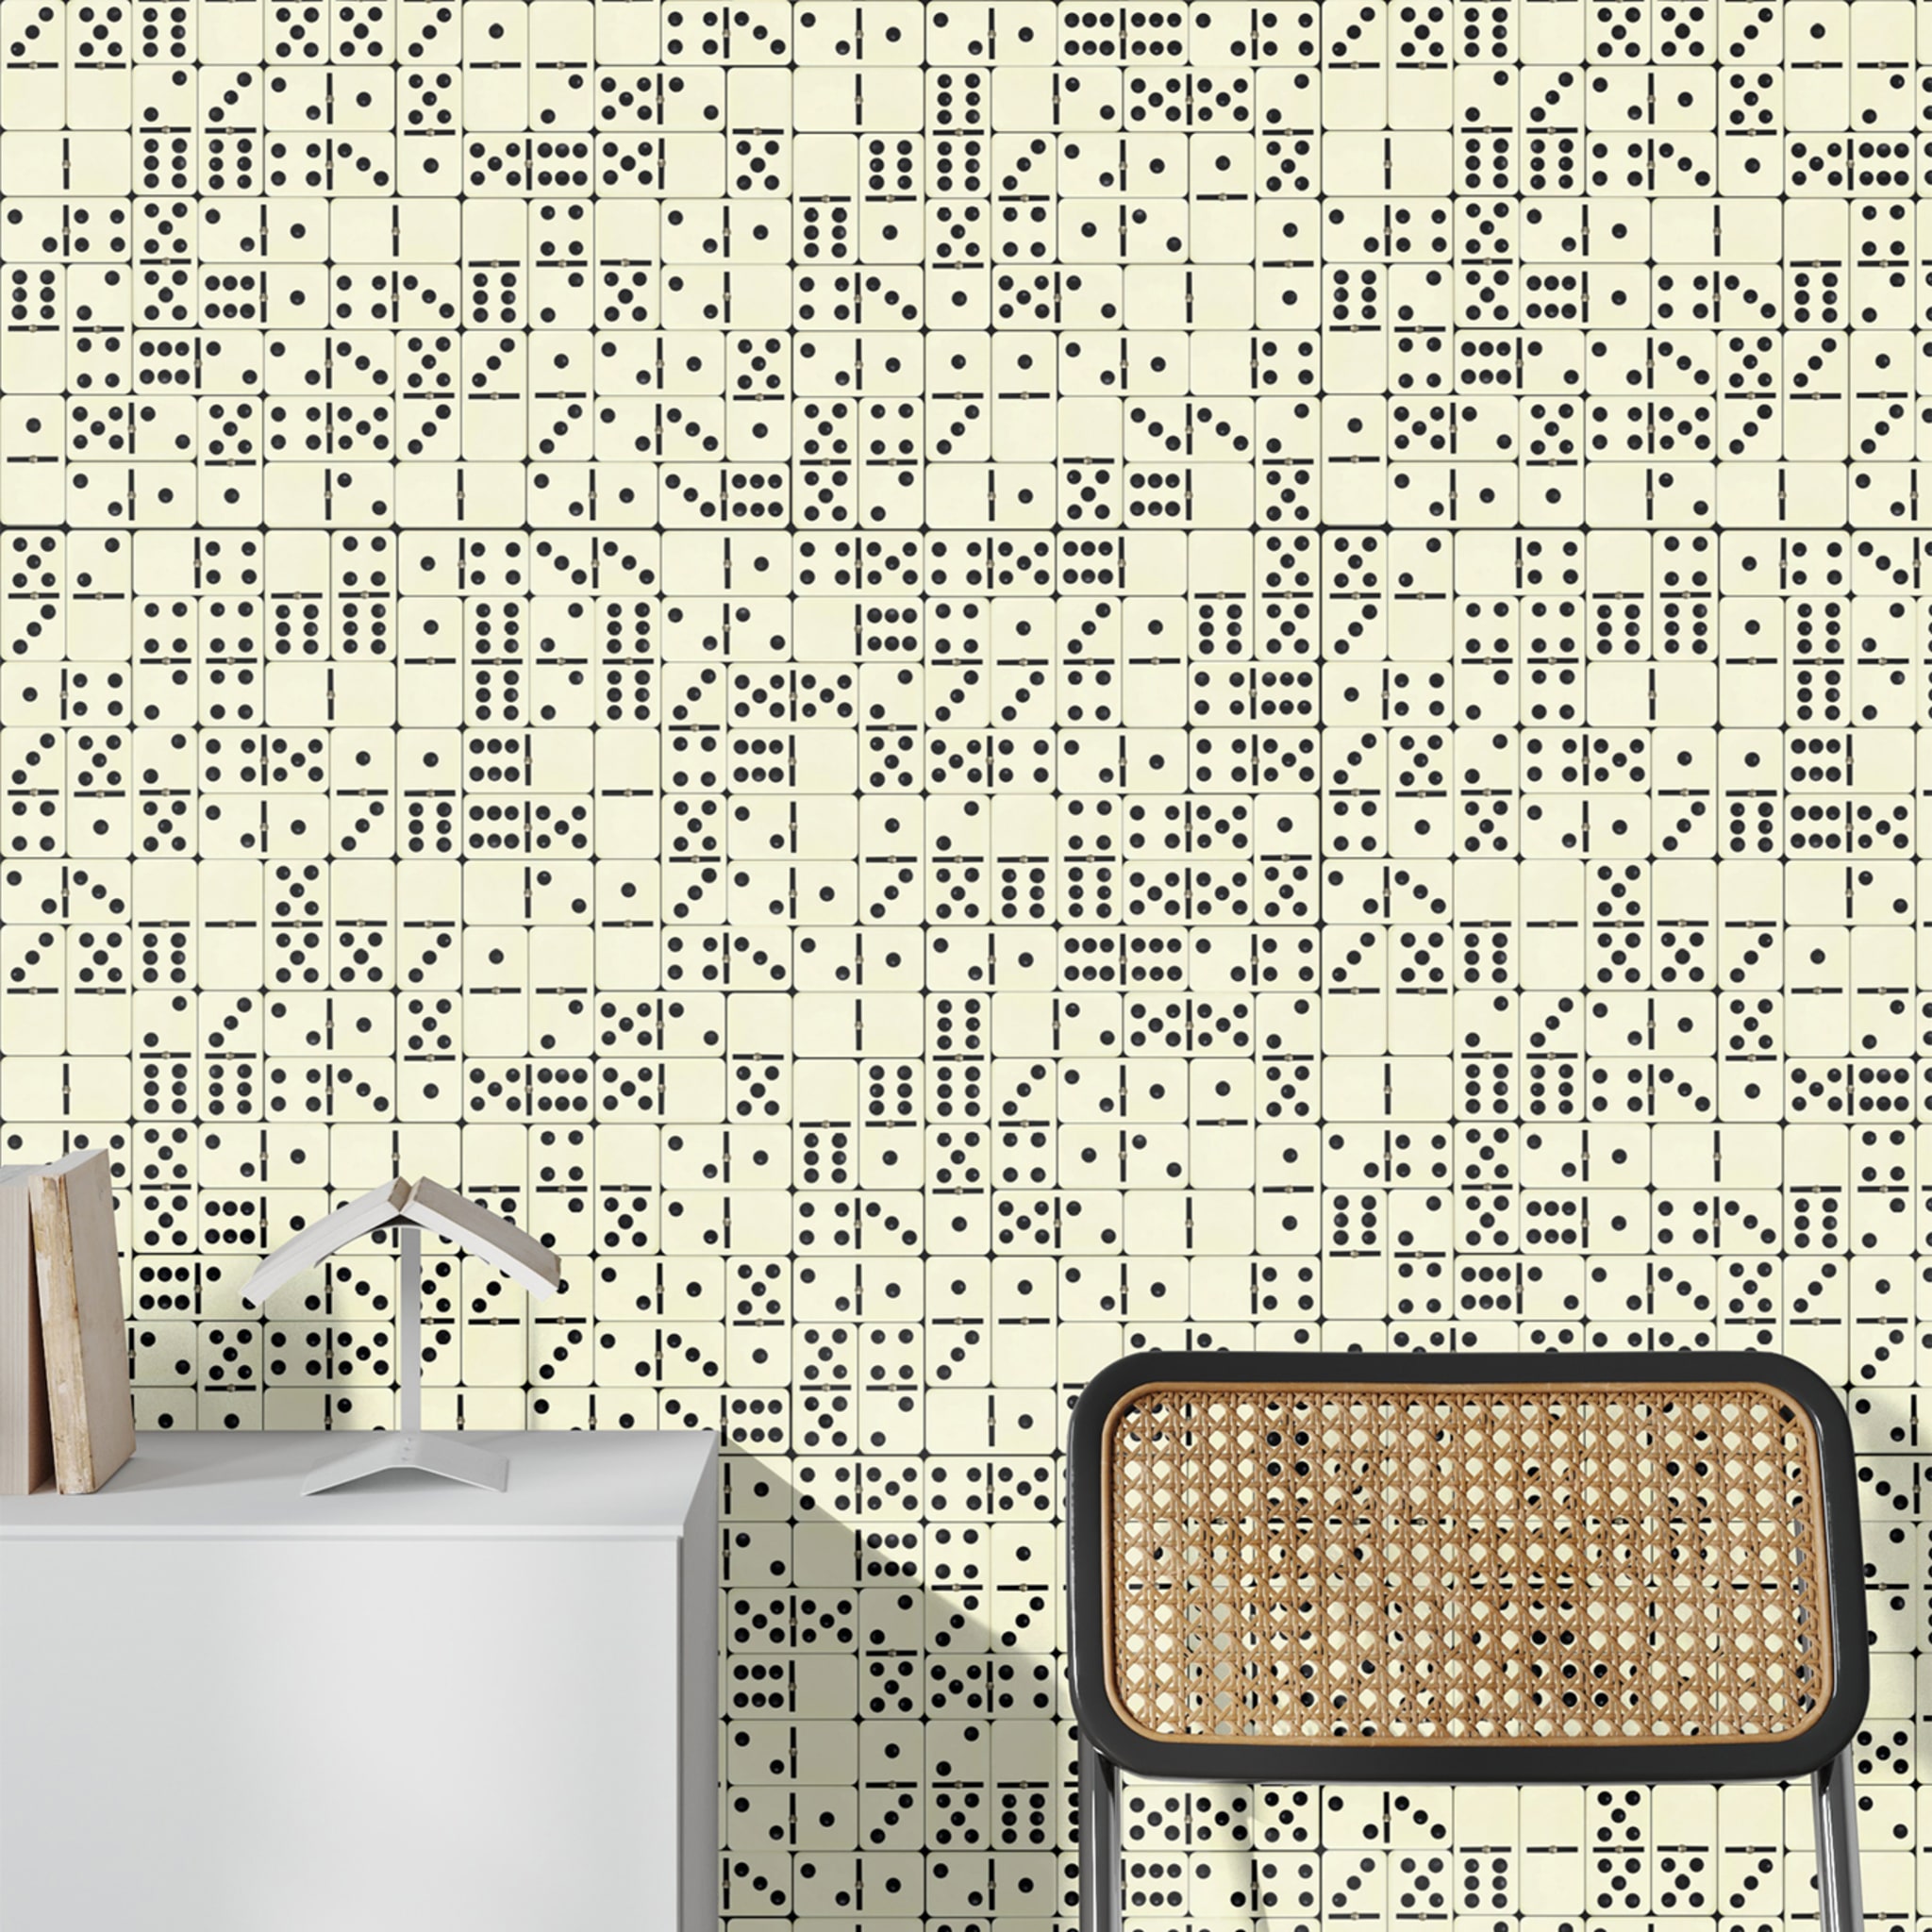 Playful Domino Tile Pattern Wallpaper - Alternative view 3